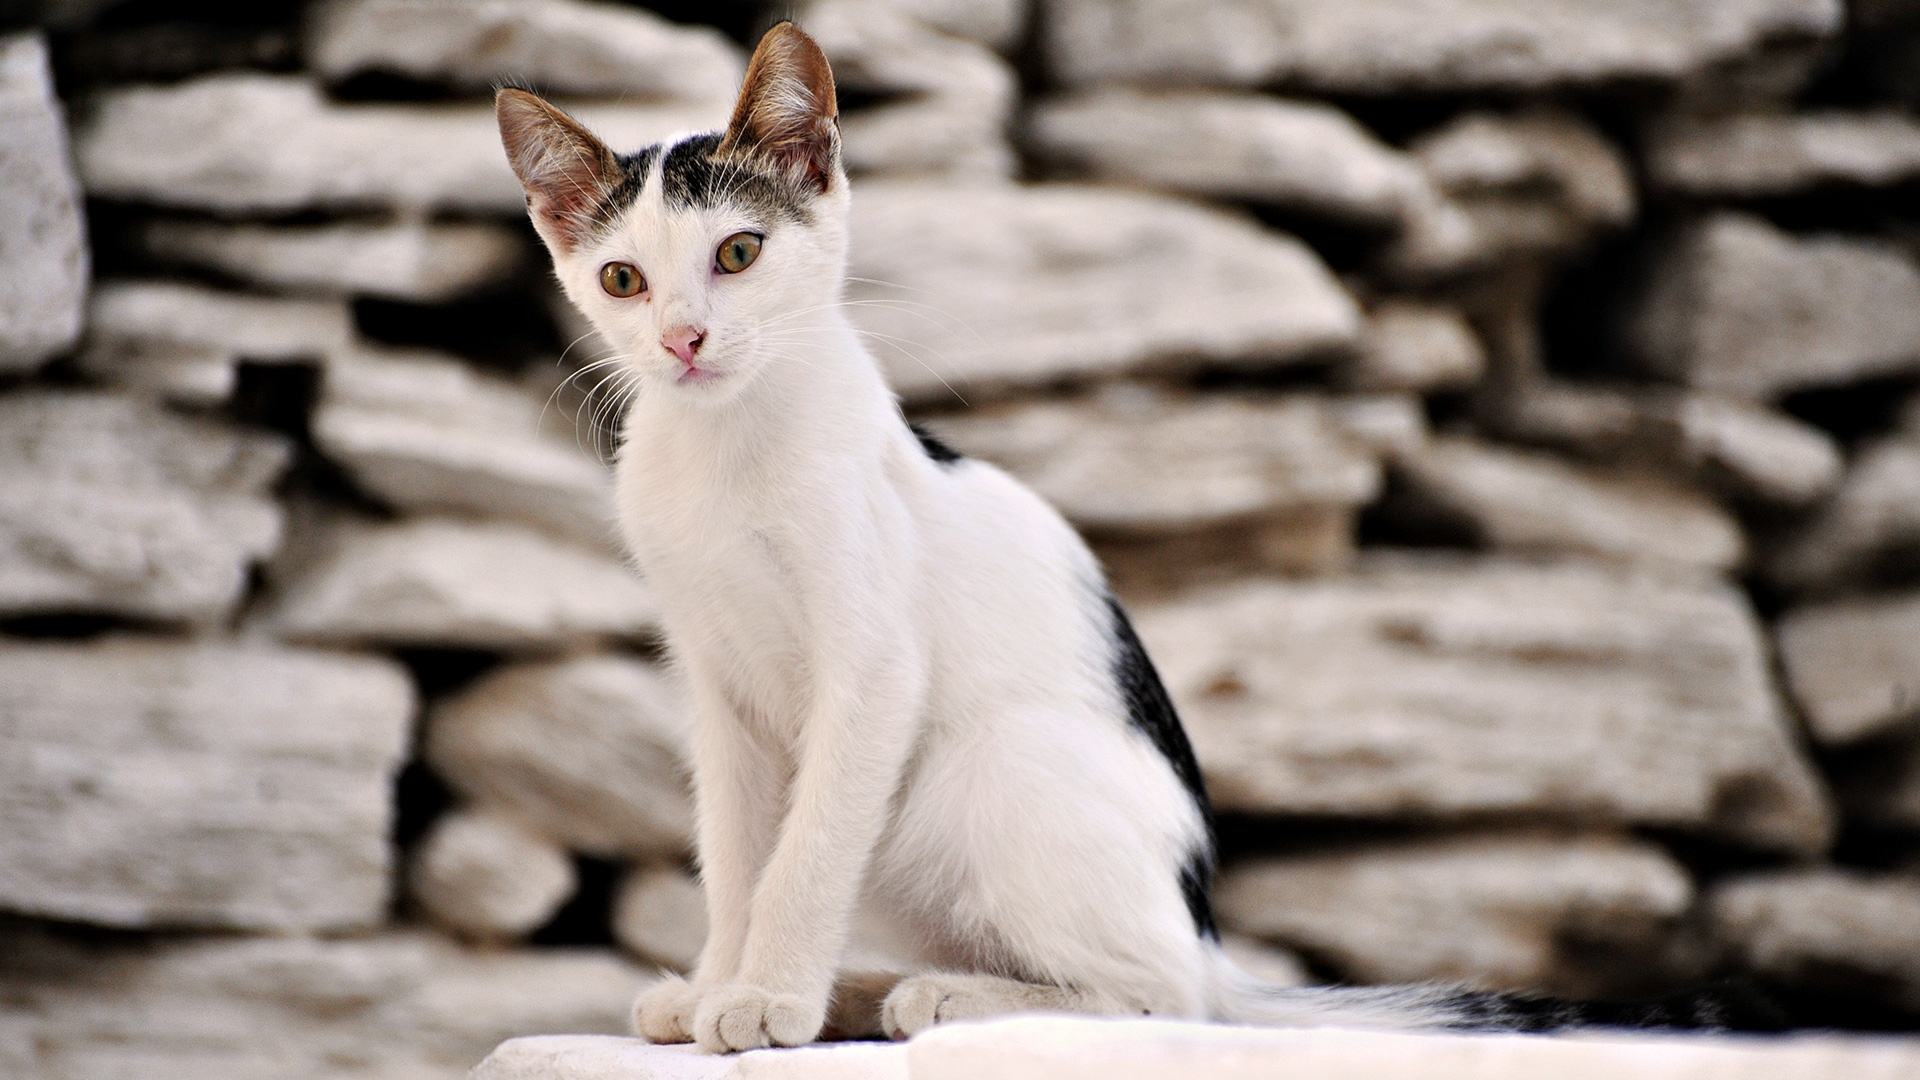 A street kitten against a stone wall.